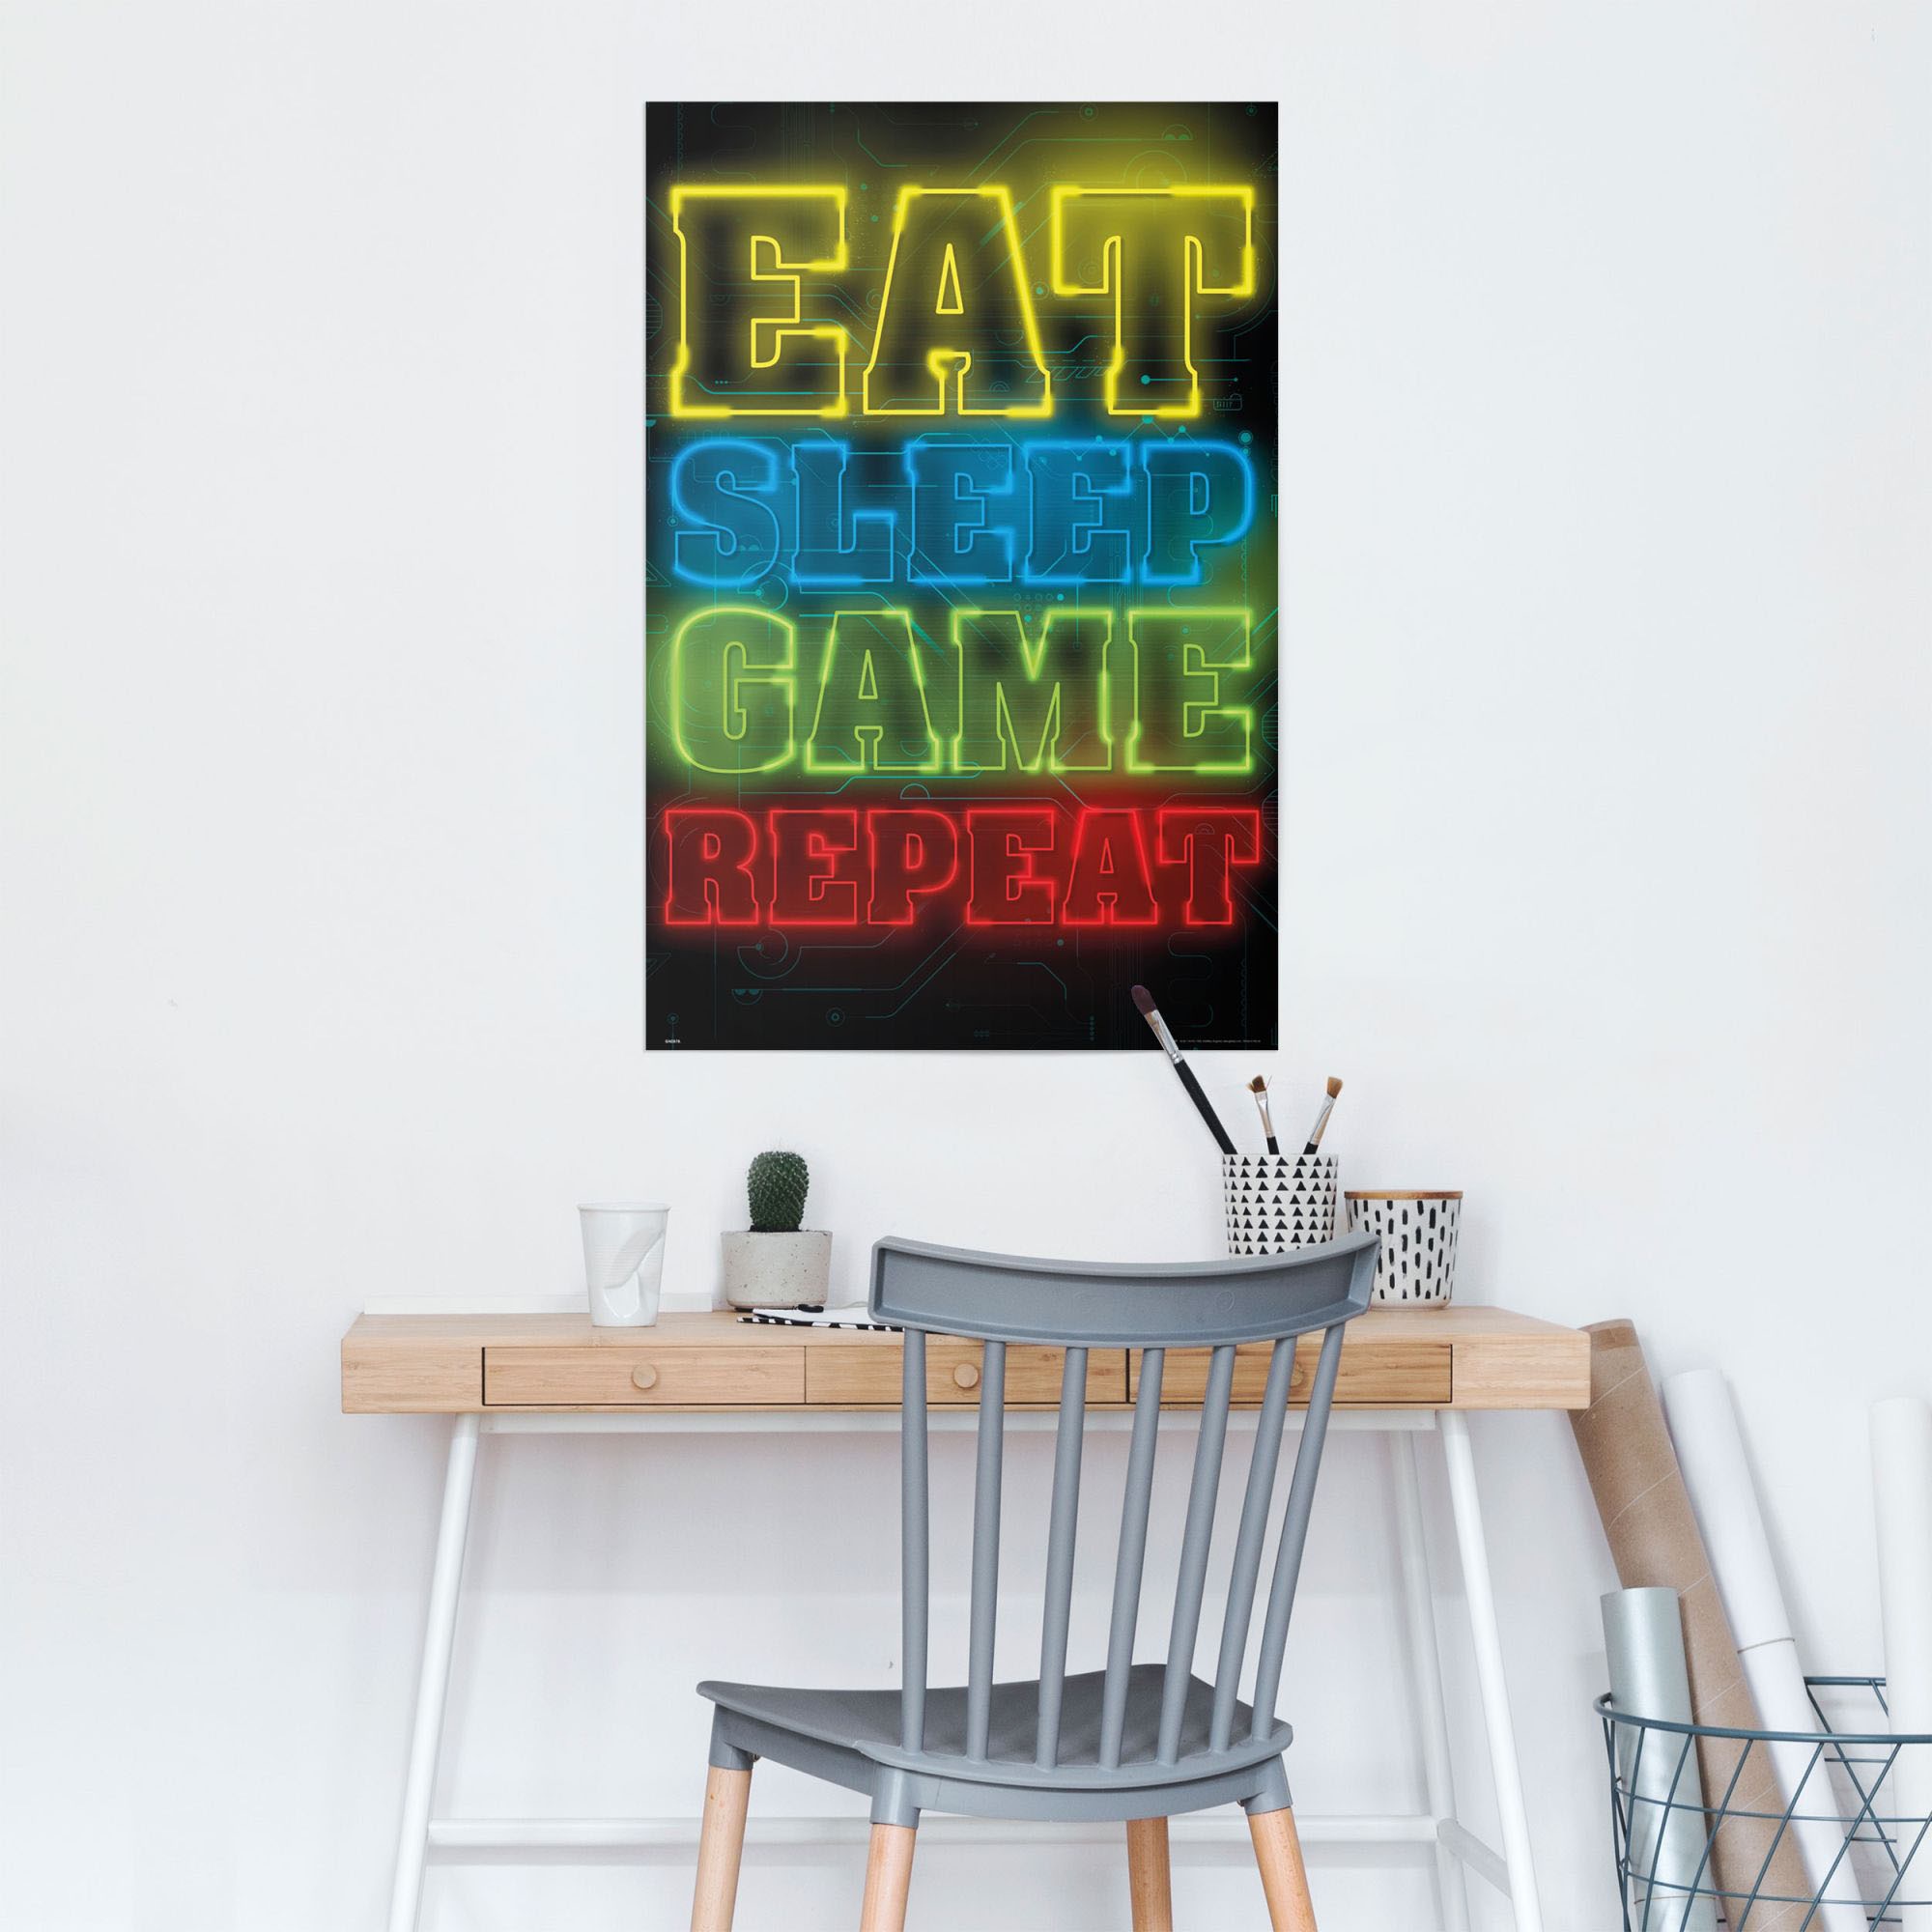 Reinders! Poster »Poster Spiele, bequem (1 kaufen repeat«, sleep St.) Zocken game Eat